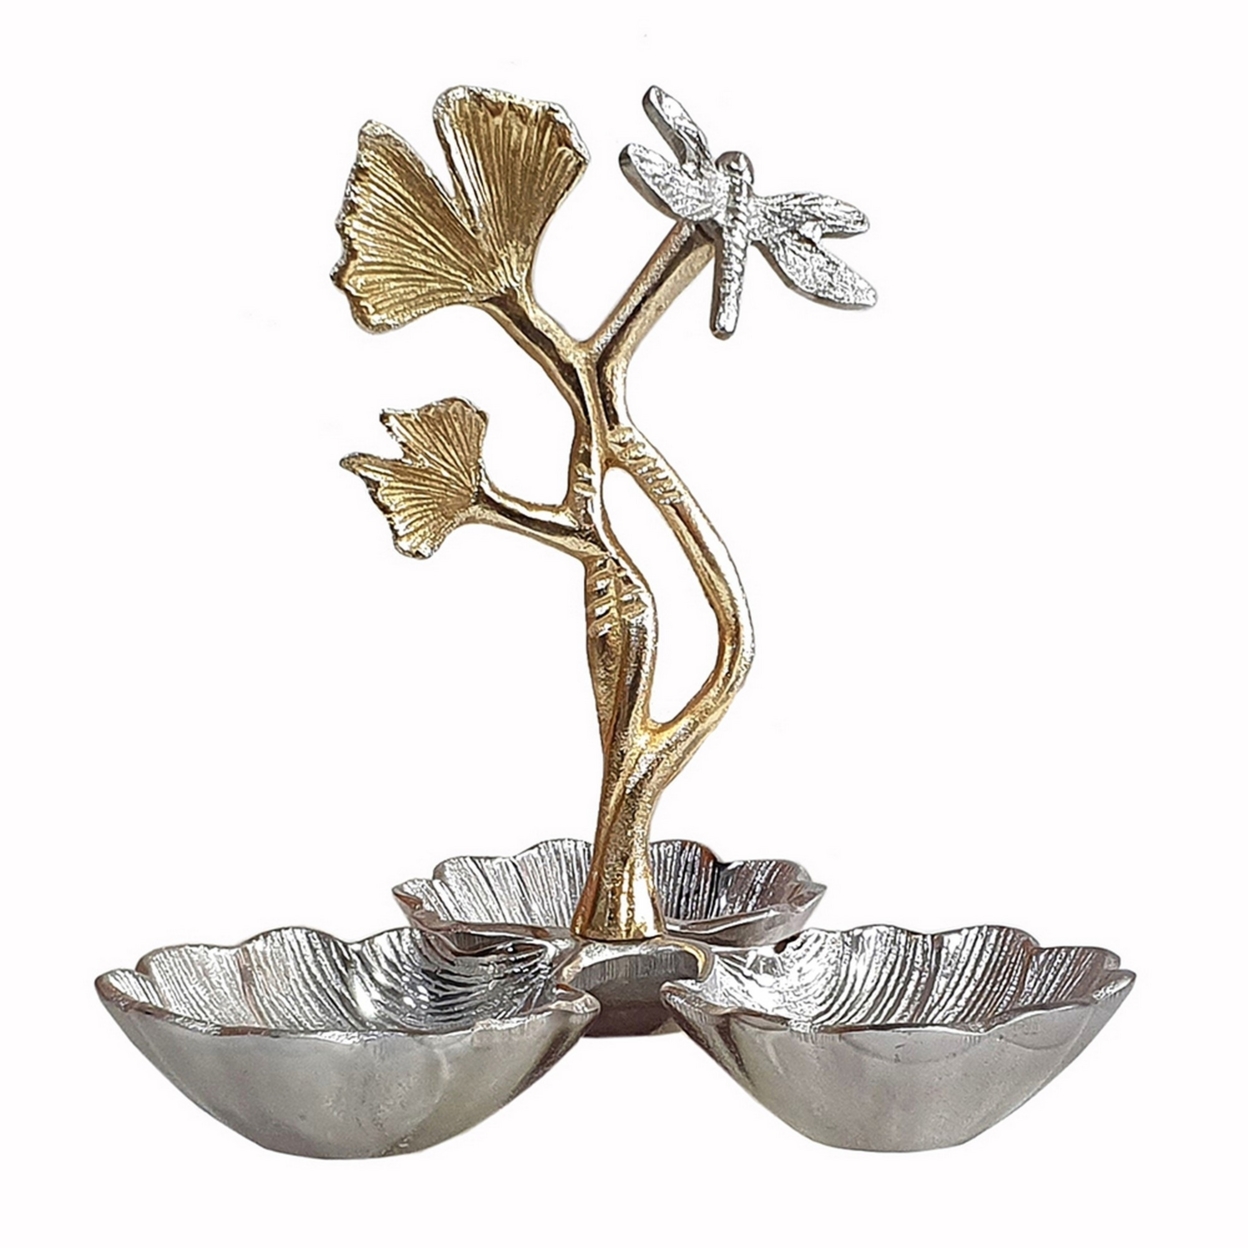 Keva 9 Inch Decorative Bowl, Curved Leaf Design, 2 Tone Gold, Silver Finish, Saltoro Sherpi